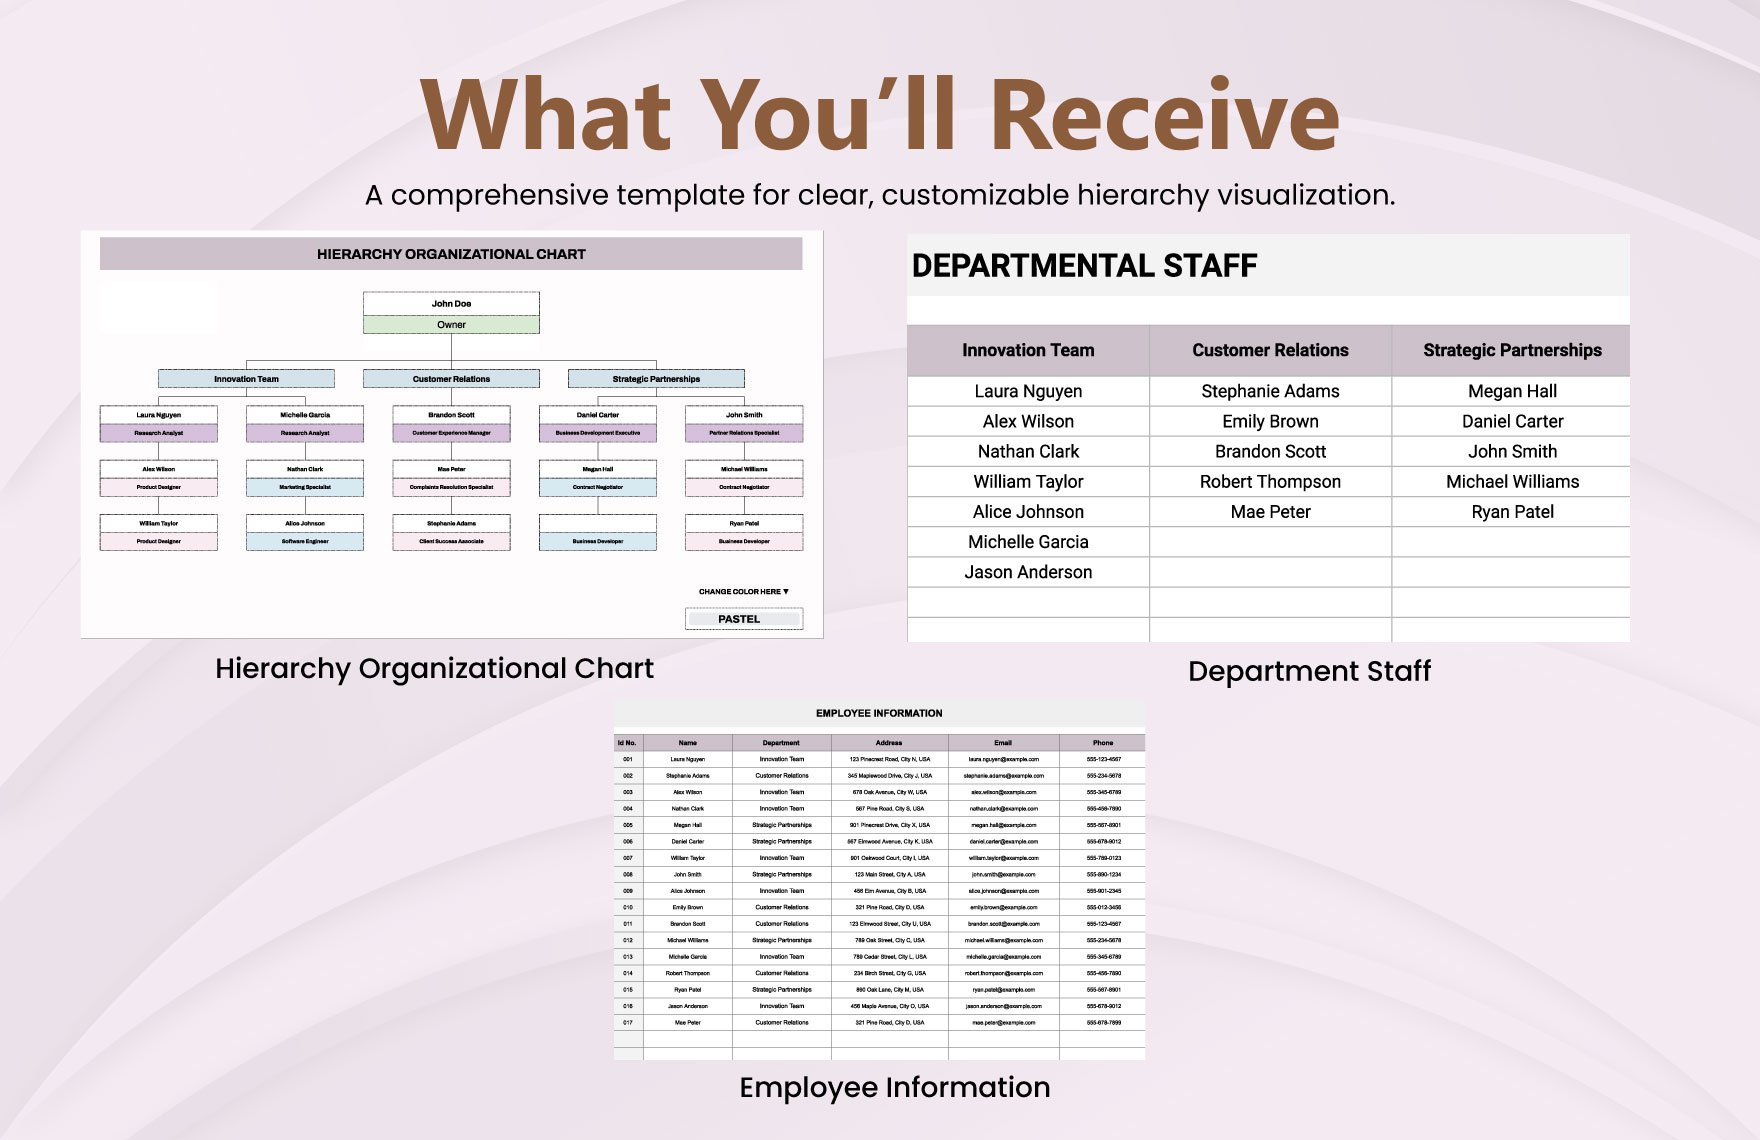 Hierarchy Organizational Chart Template